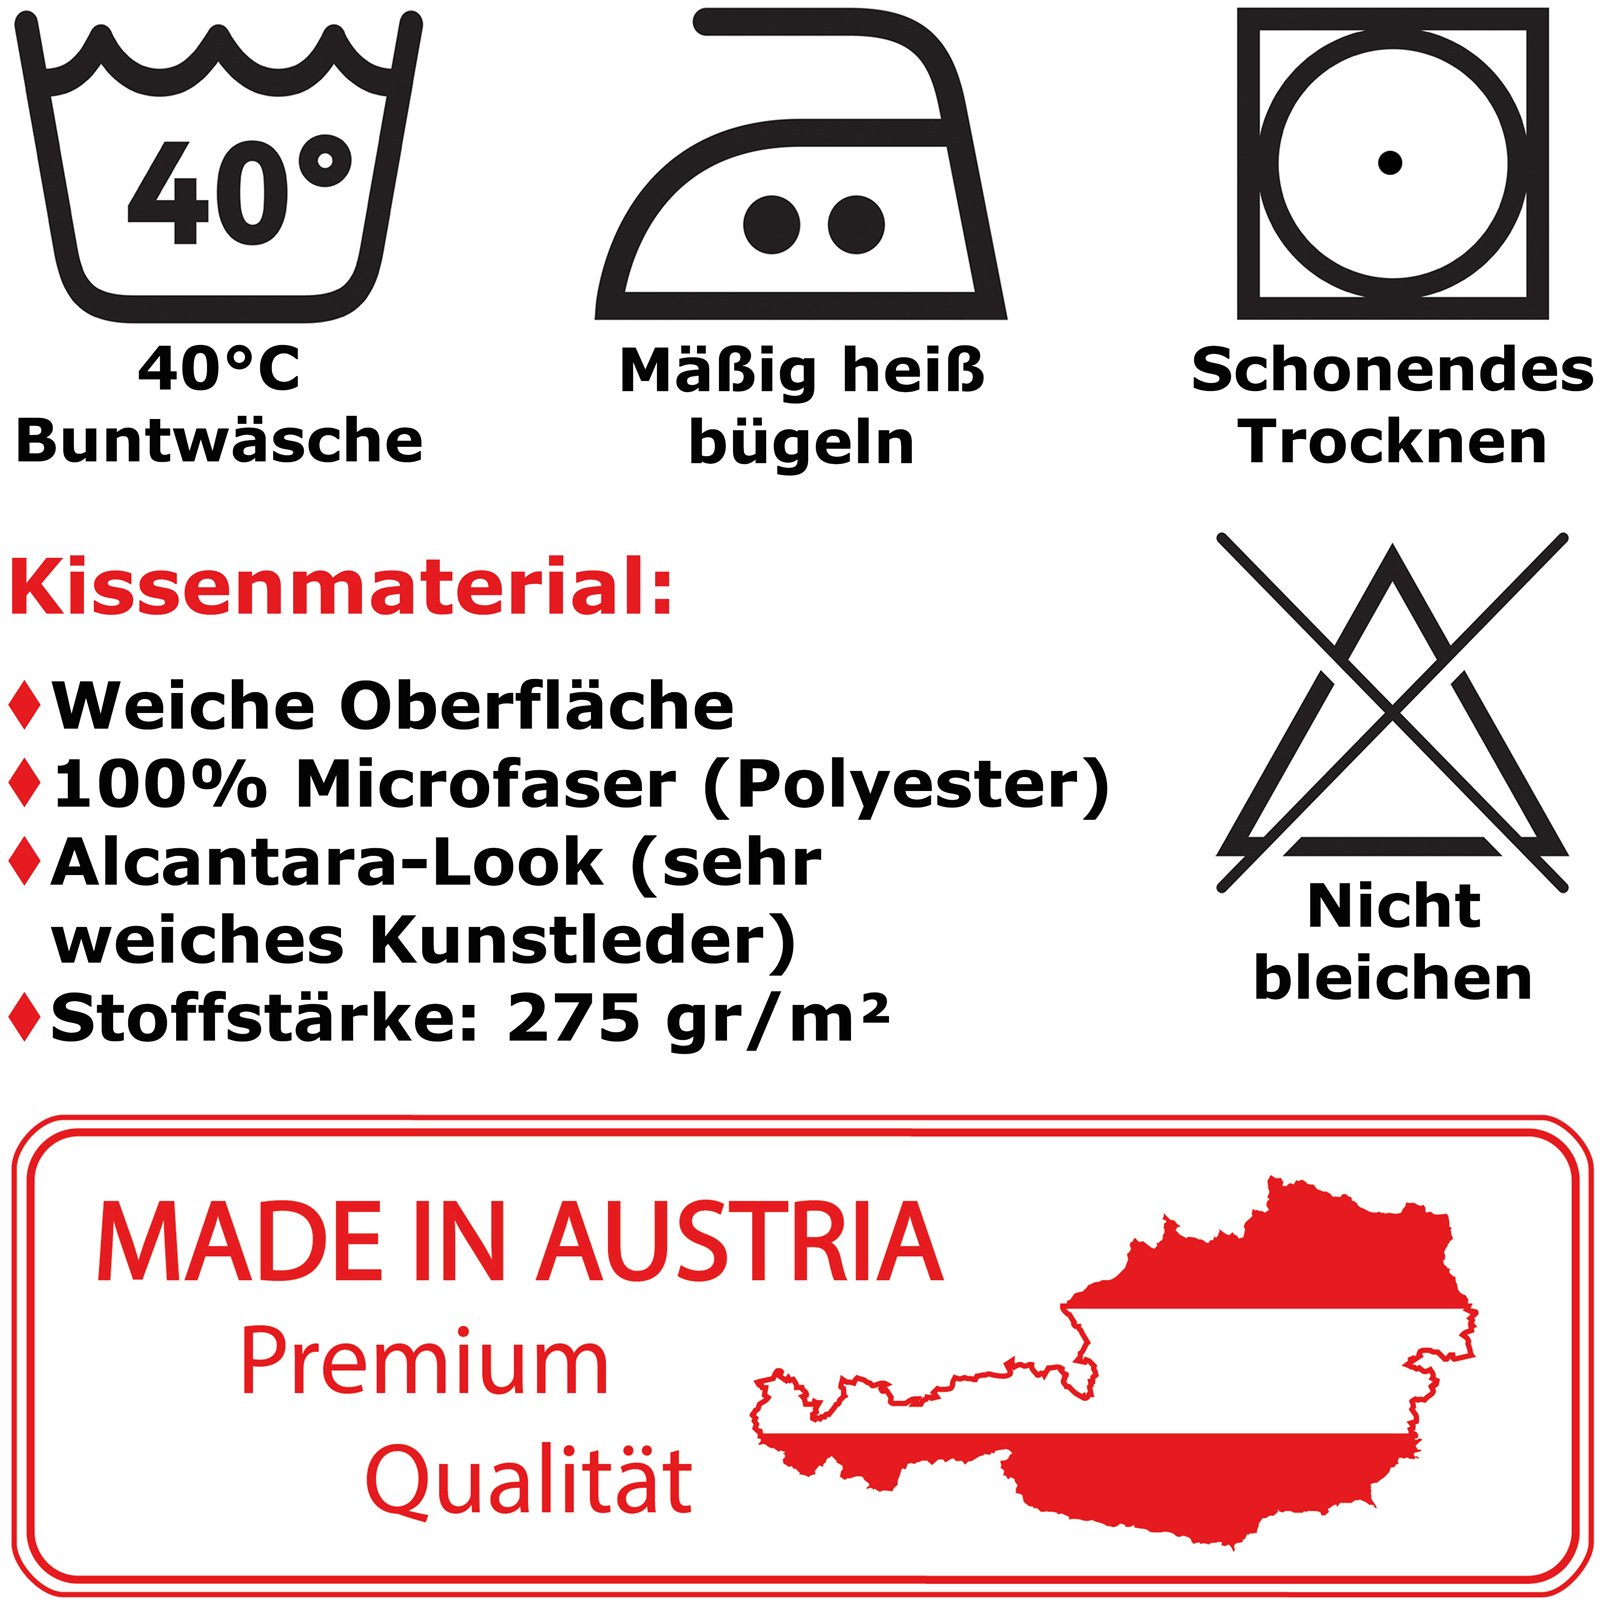 I am from Austria - Kissen